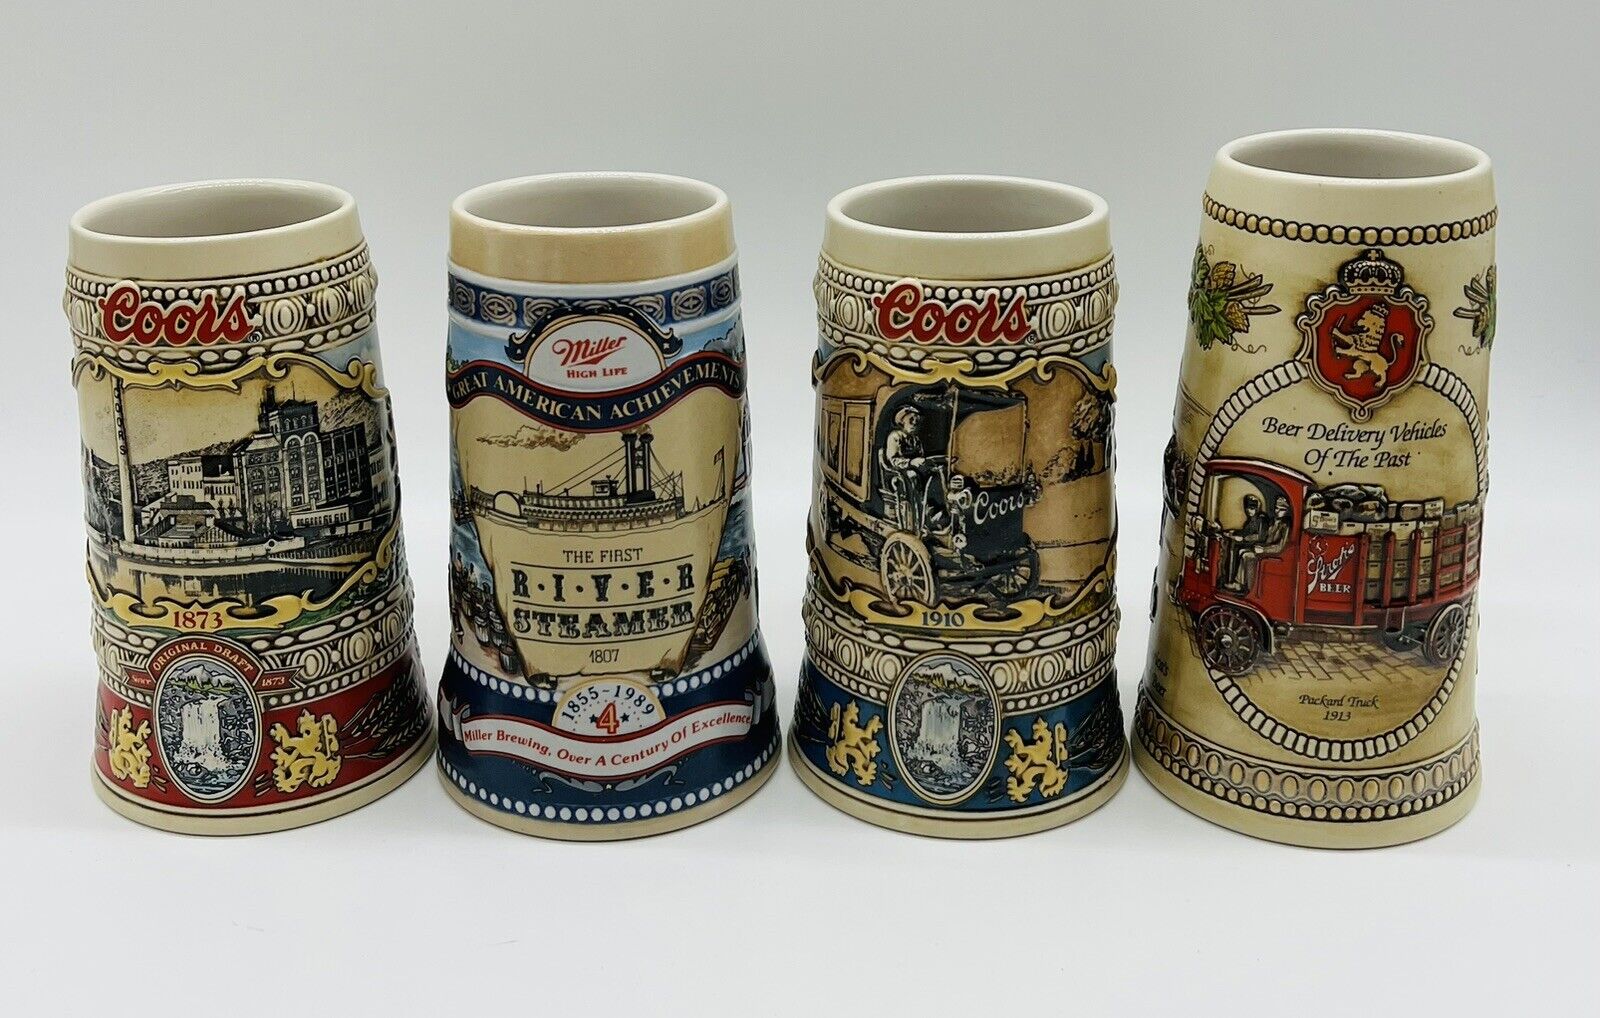 VTG Coors 1988-89 Coors Strohs Miller Collectors Edition Beer Stein Mug LOT OF 4